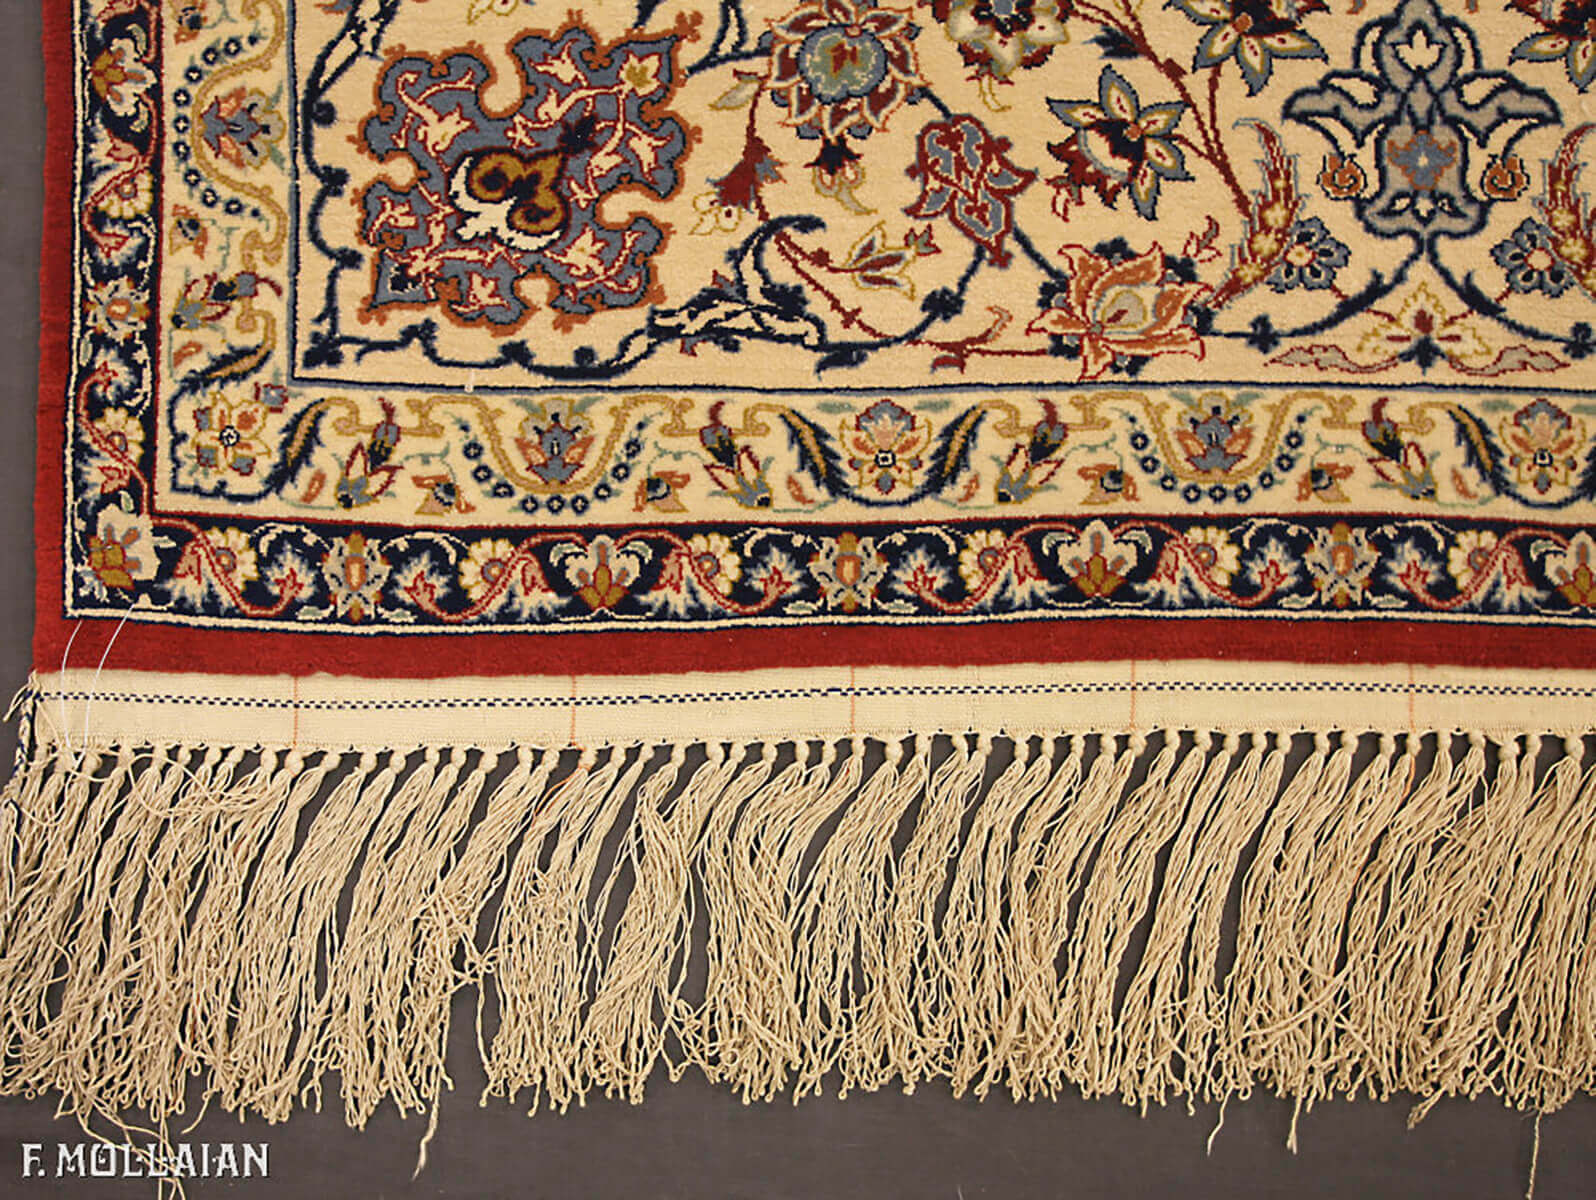 Tapis Persan Semi-Antique Isfahan Chaîne de Soie n°:51513718